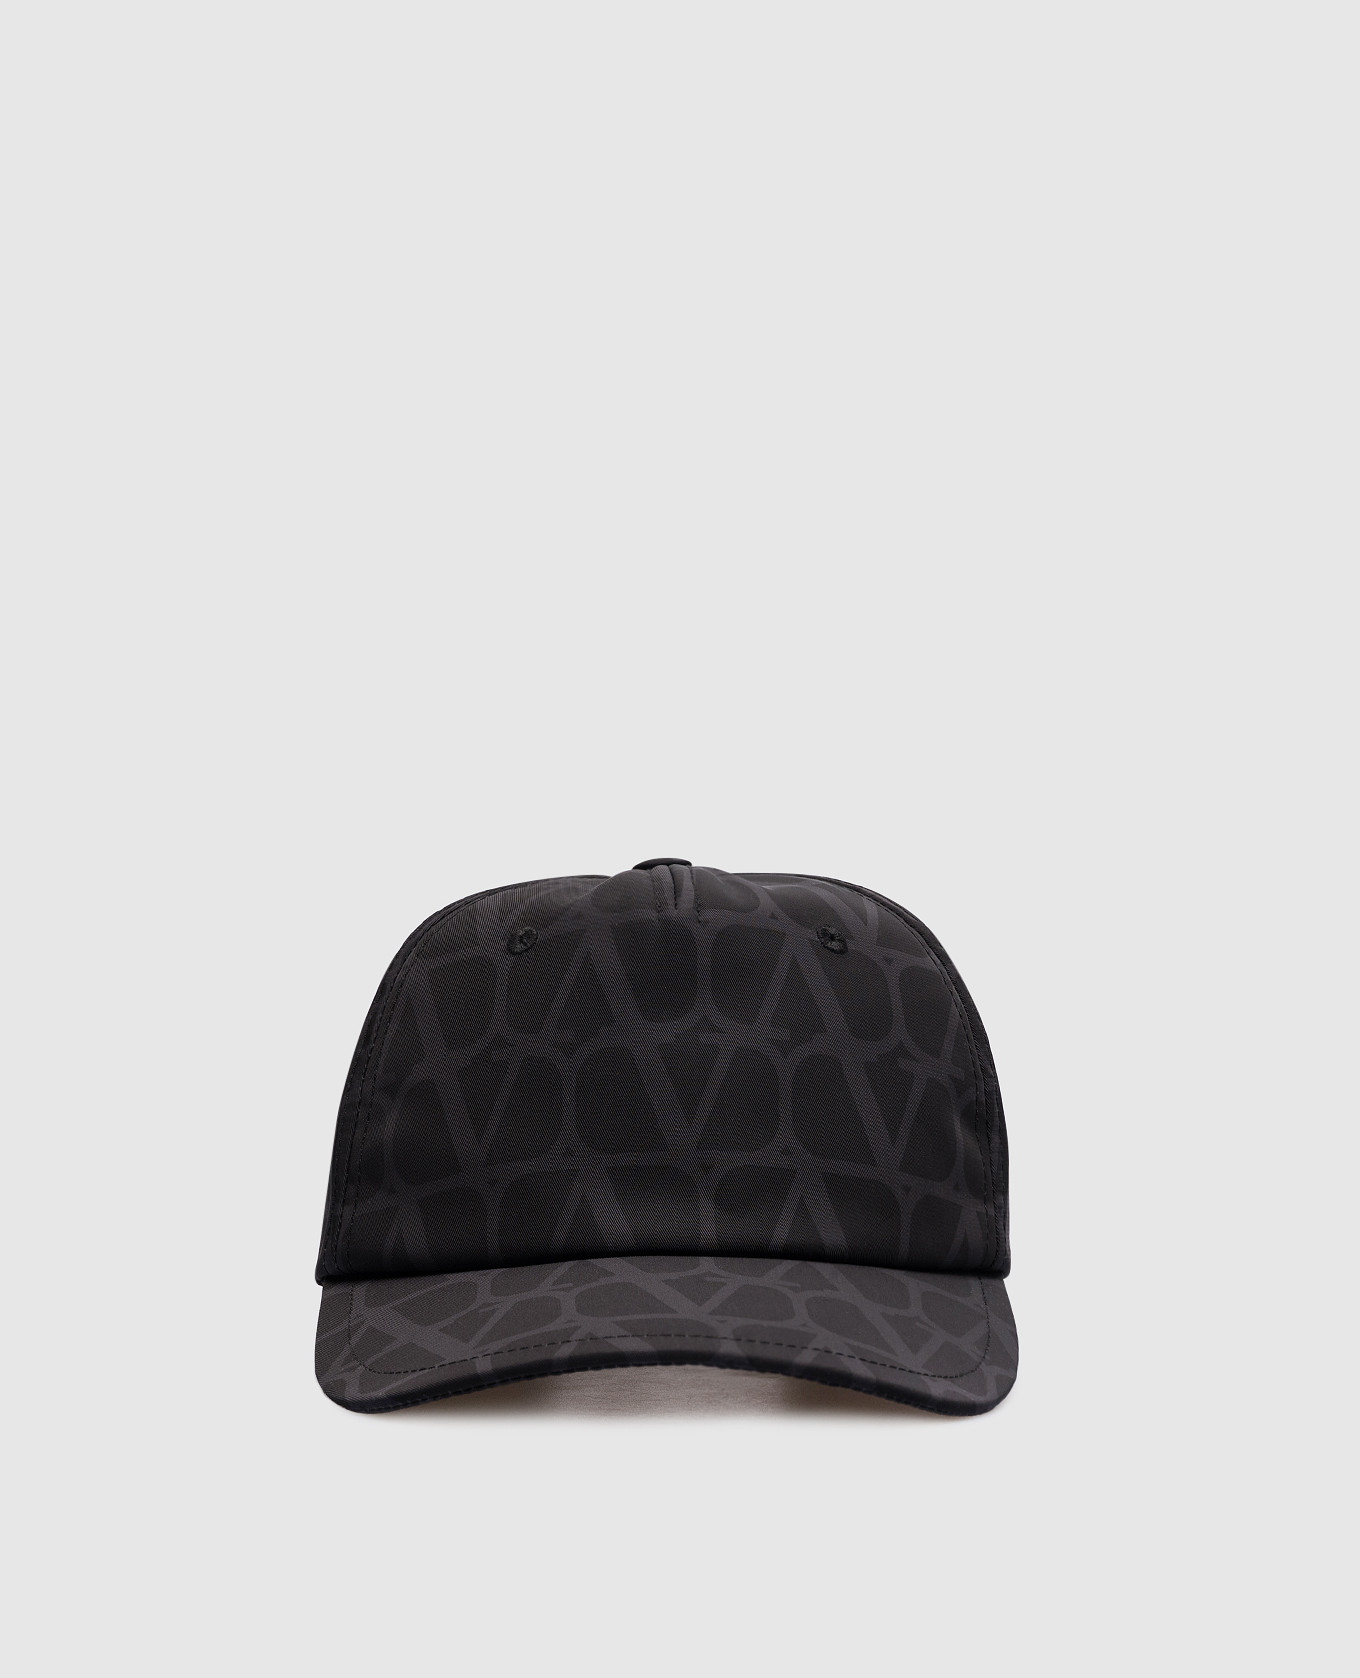 Black cap in Toile Iconographe pattern